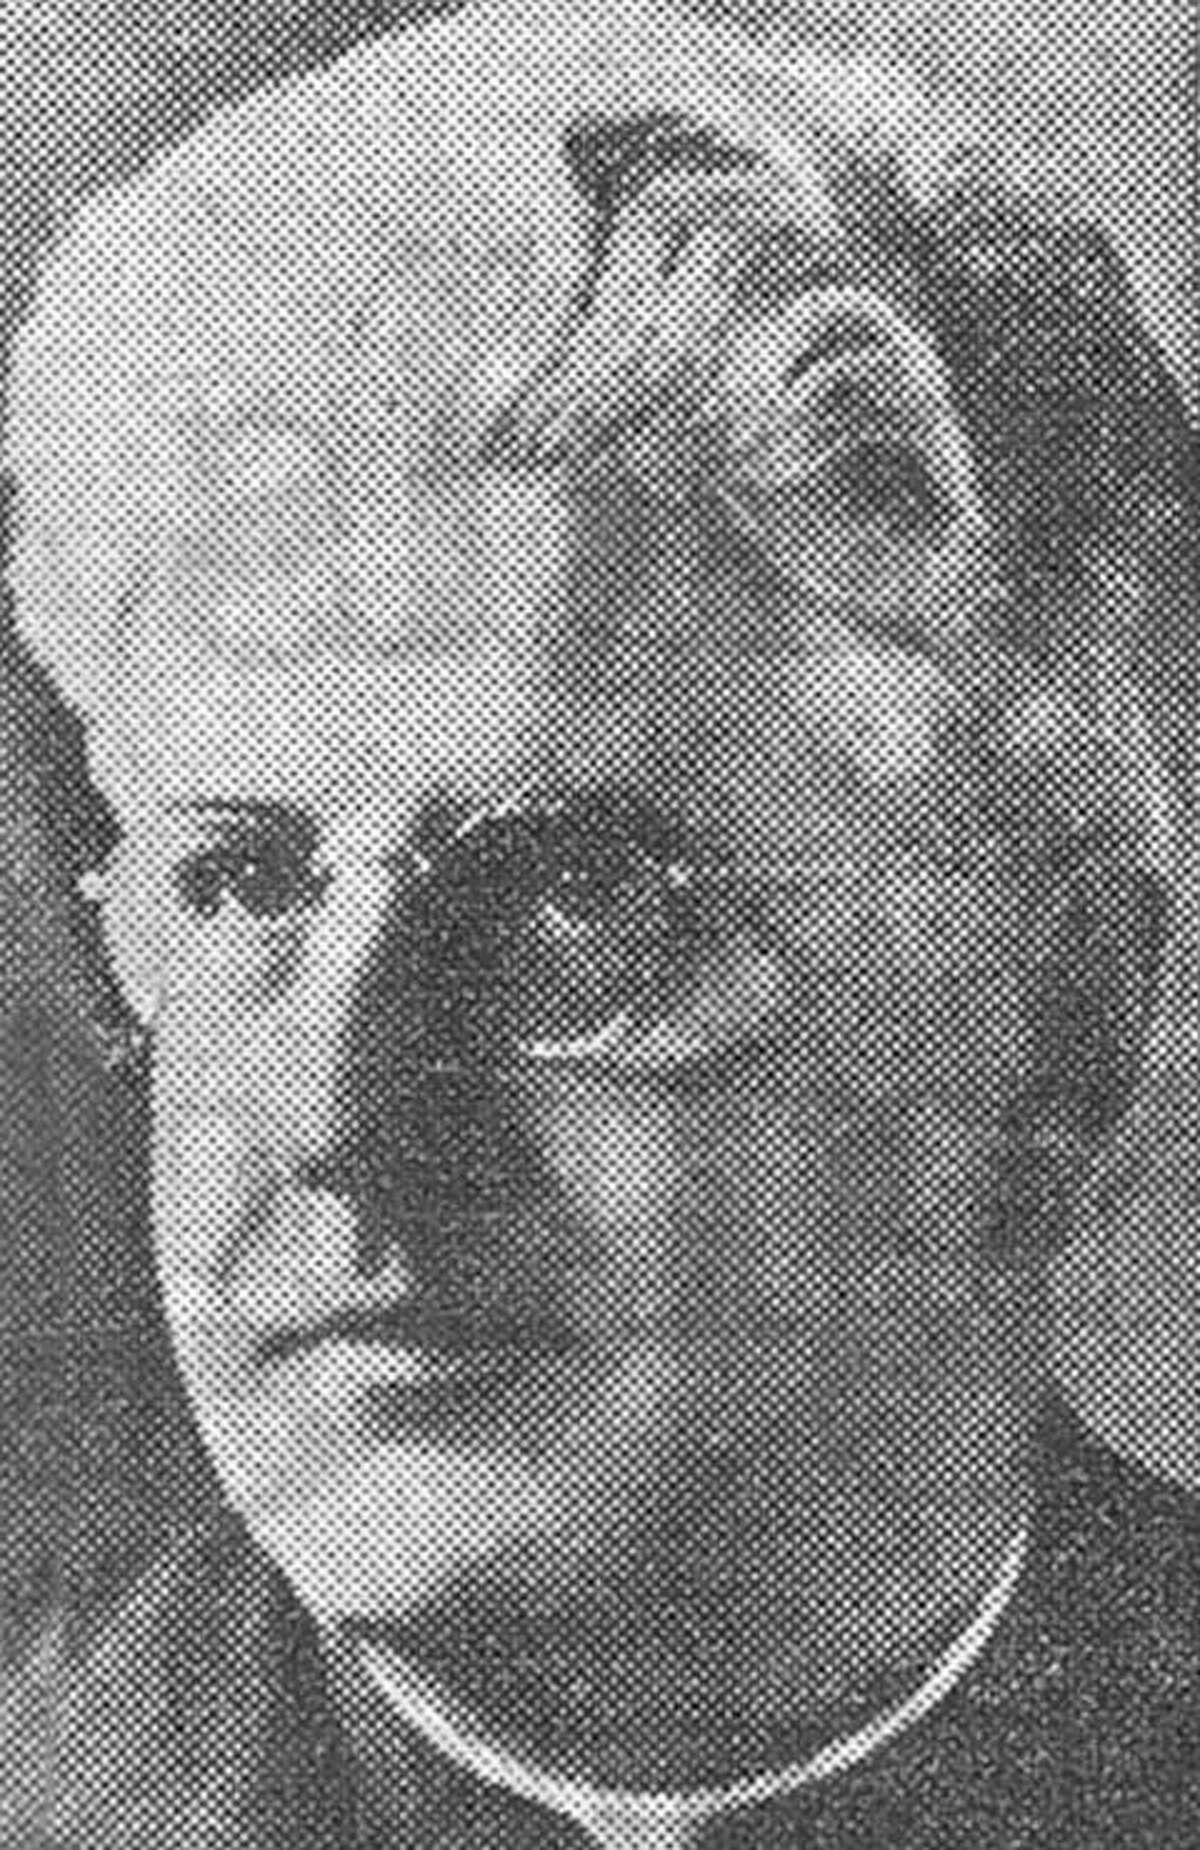 Francis H. McGlynn